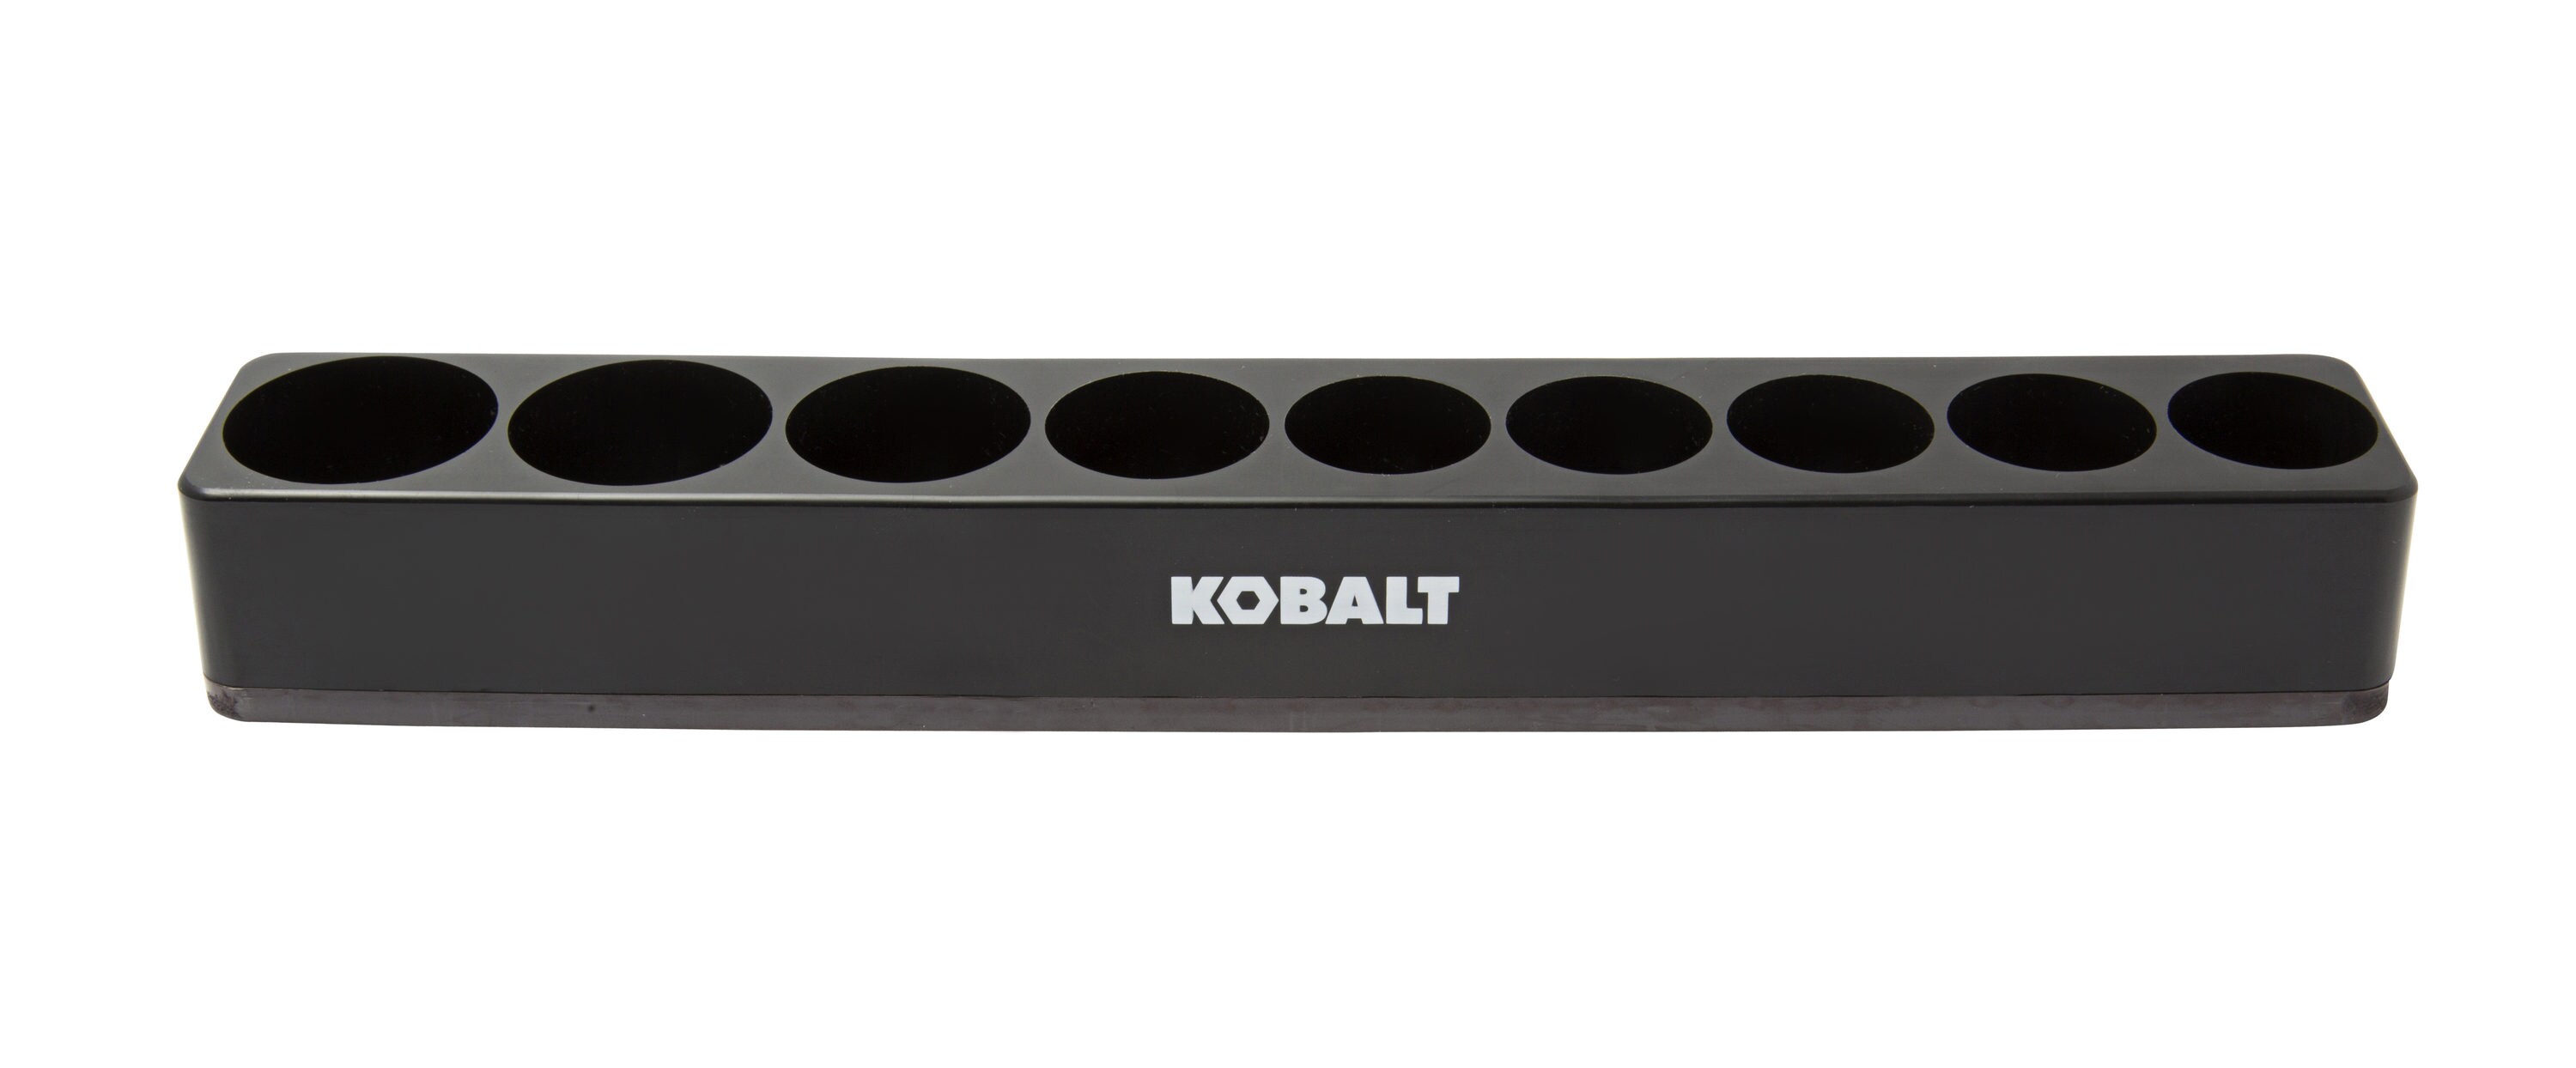 Kobalt 1/2" Drive Socket Storage Rail USA 22971 for sale online 